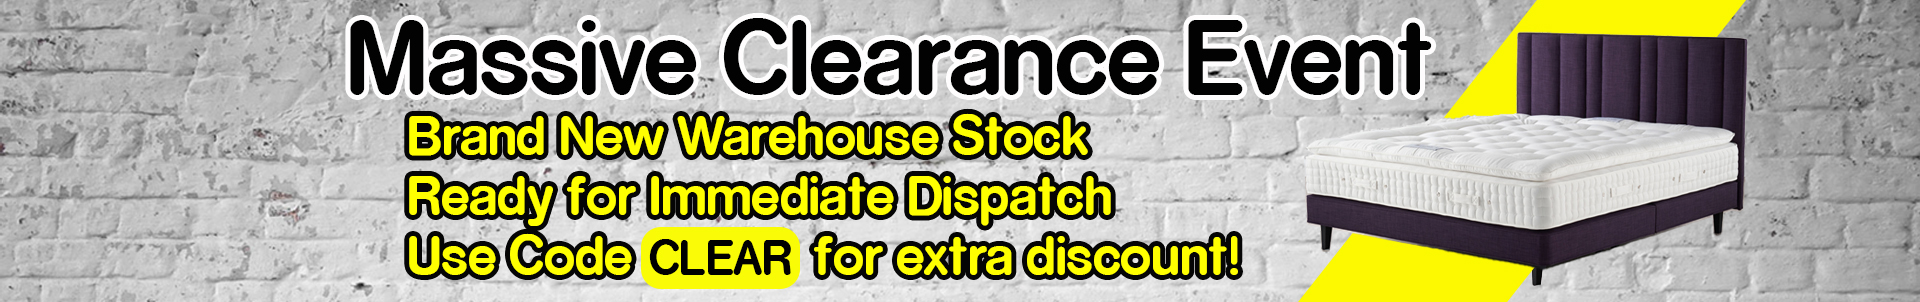 Clearance Mattress Sale